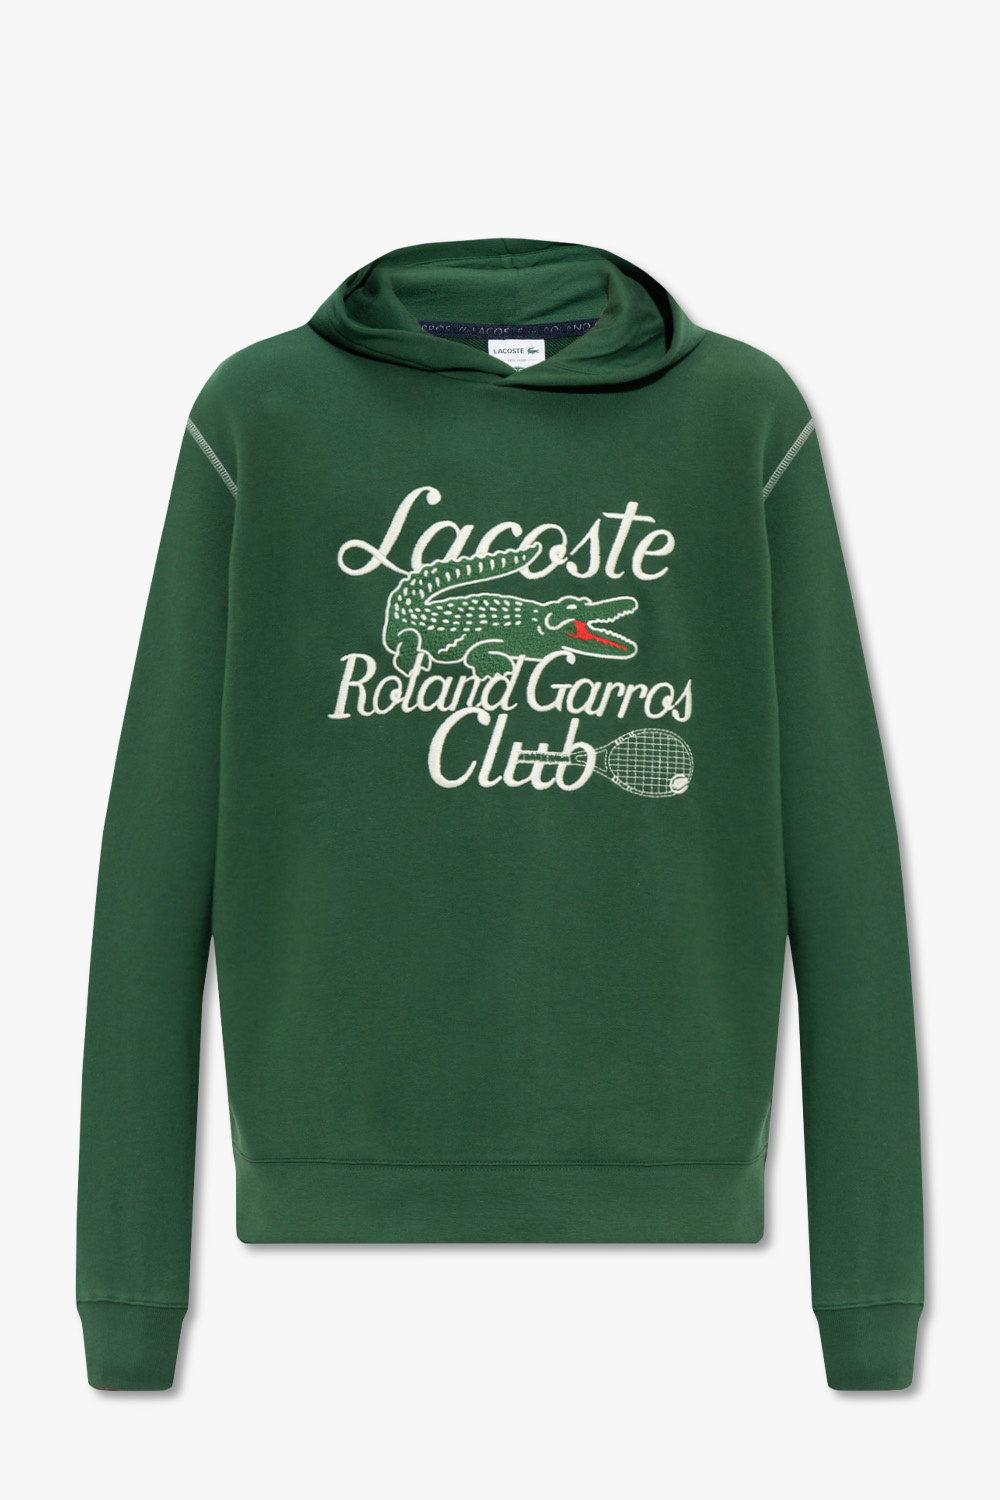 Lacoste Lacoste x Roland Garros Mens Clothing Vitkac